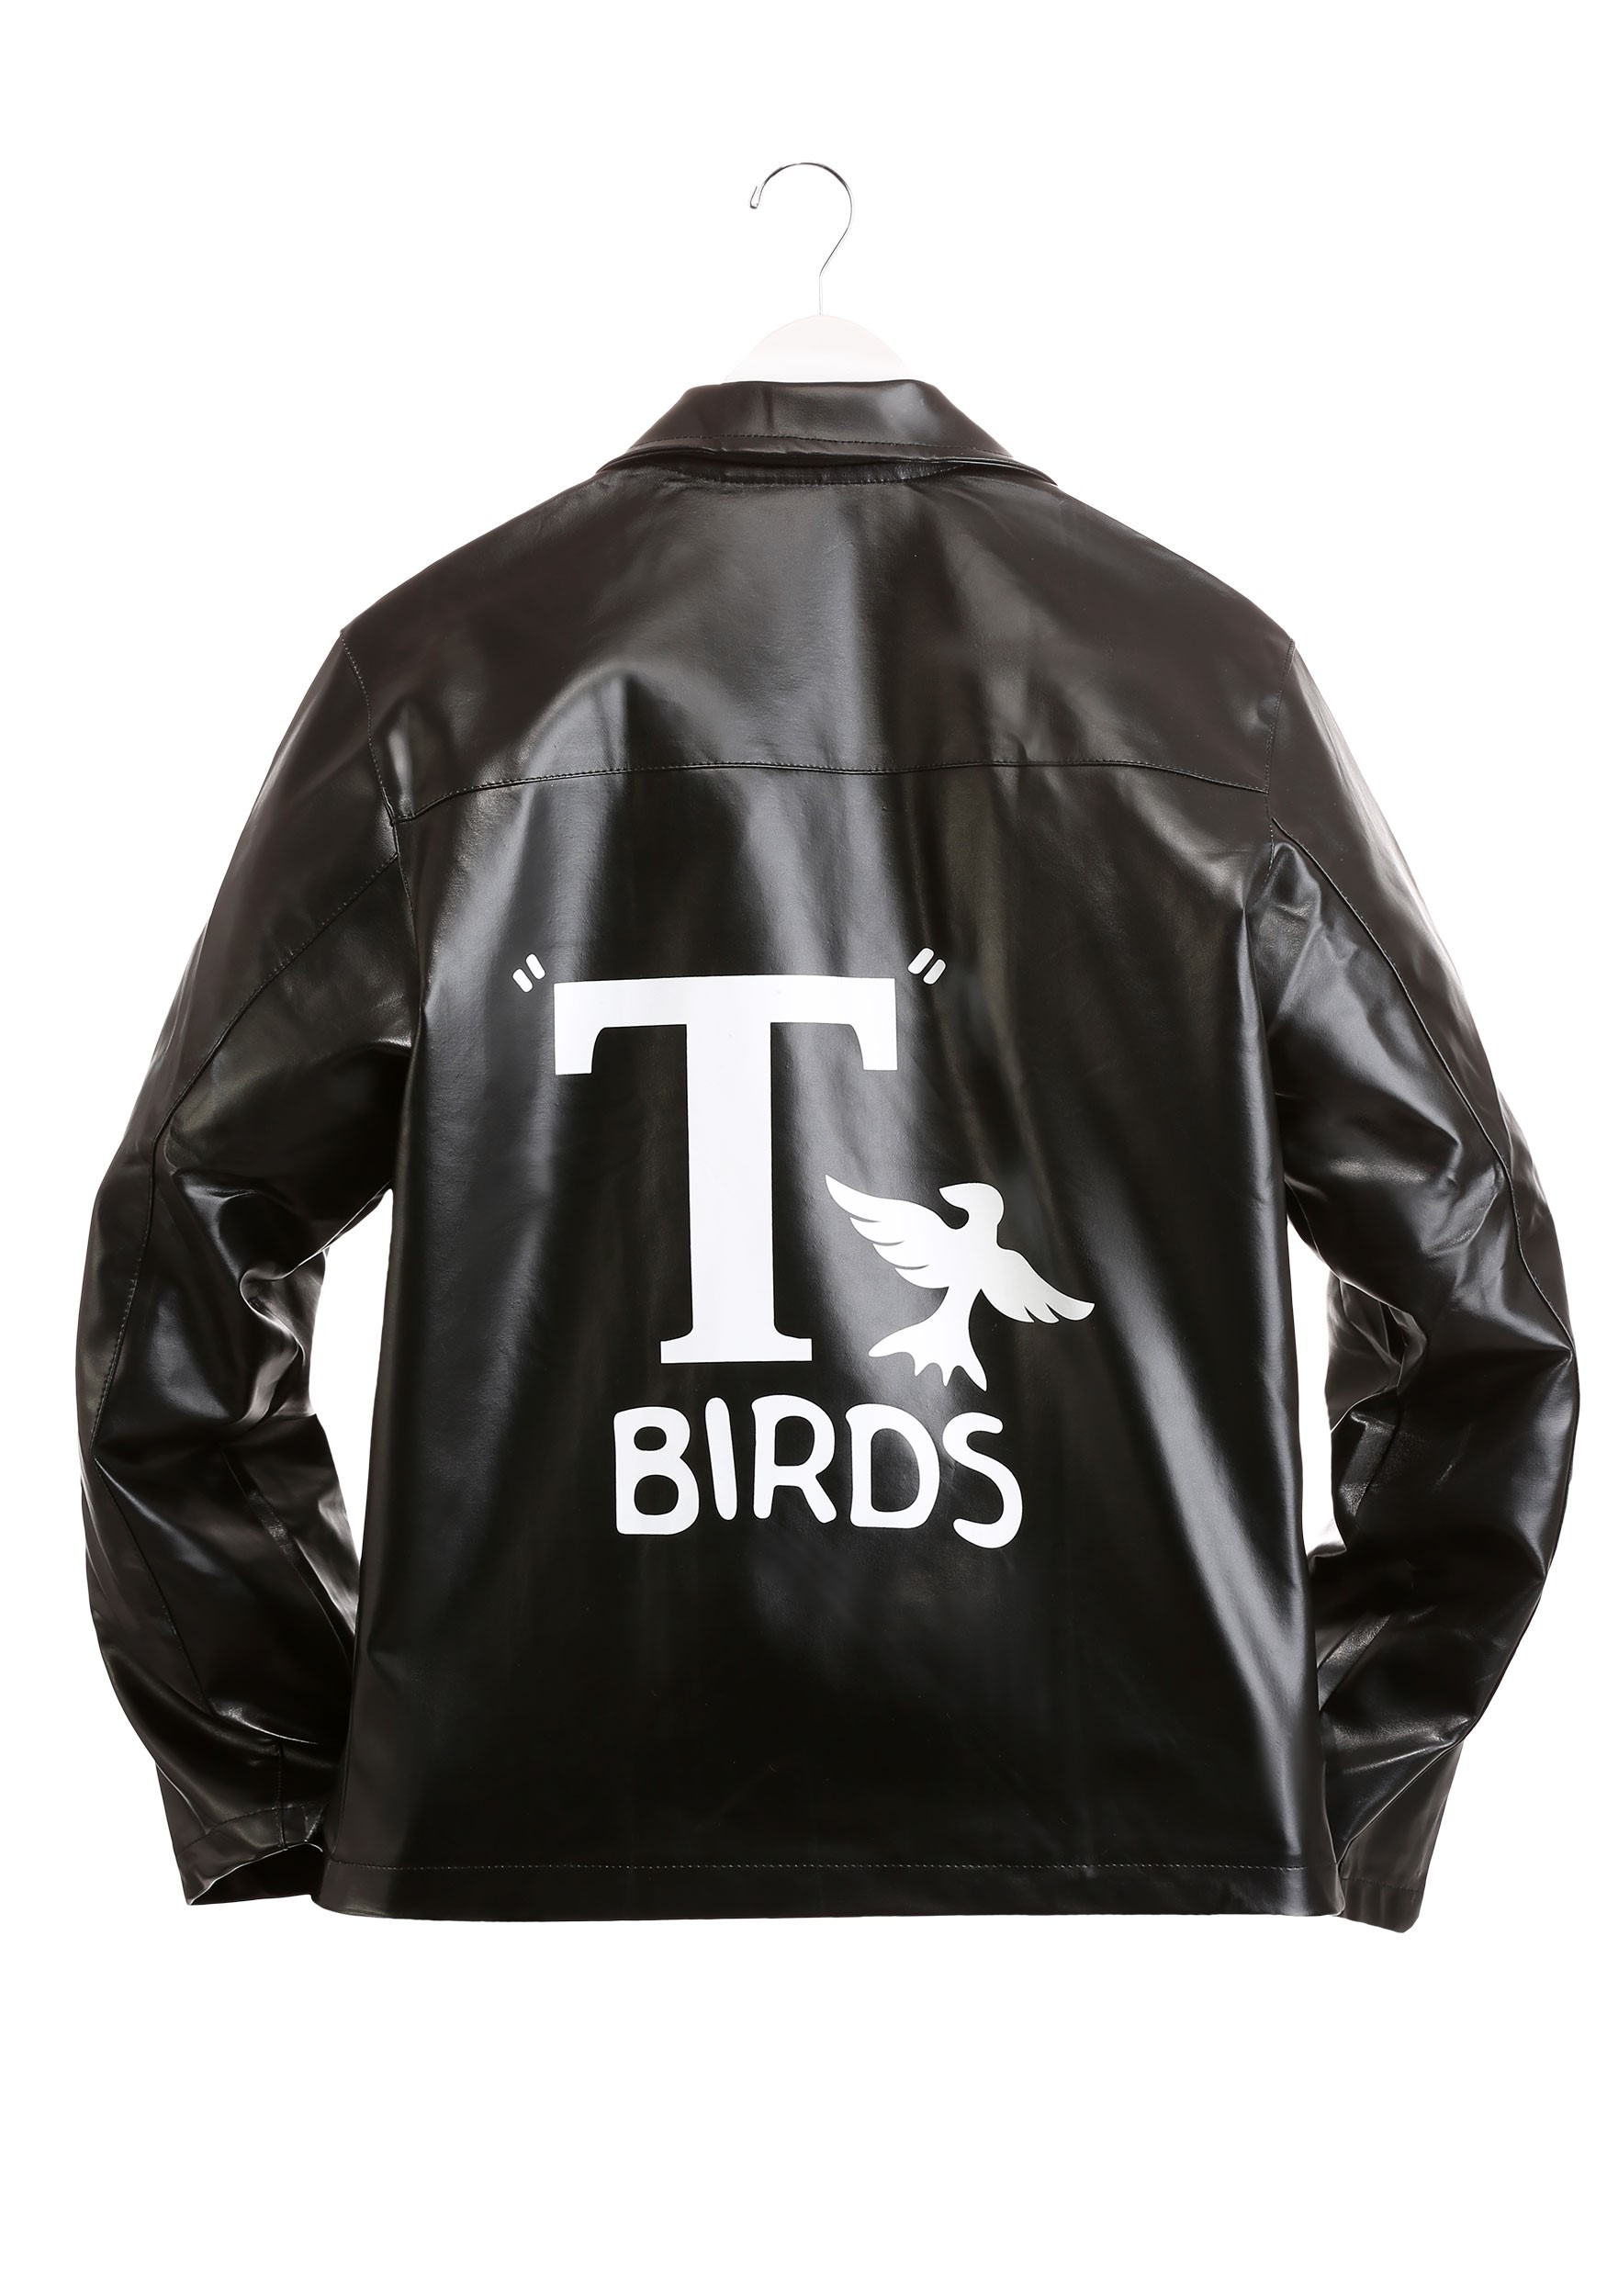 MENS T-BIRD JACKET OFFICIAL GREASE FANCY DRESS COSTUME 1950s BLACK T BIRD LOGO 